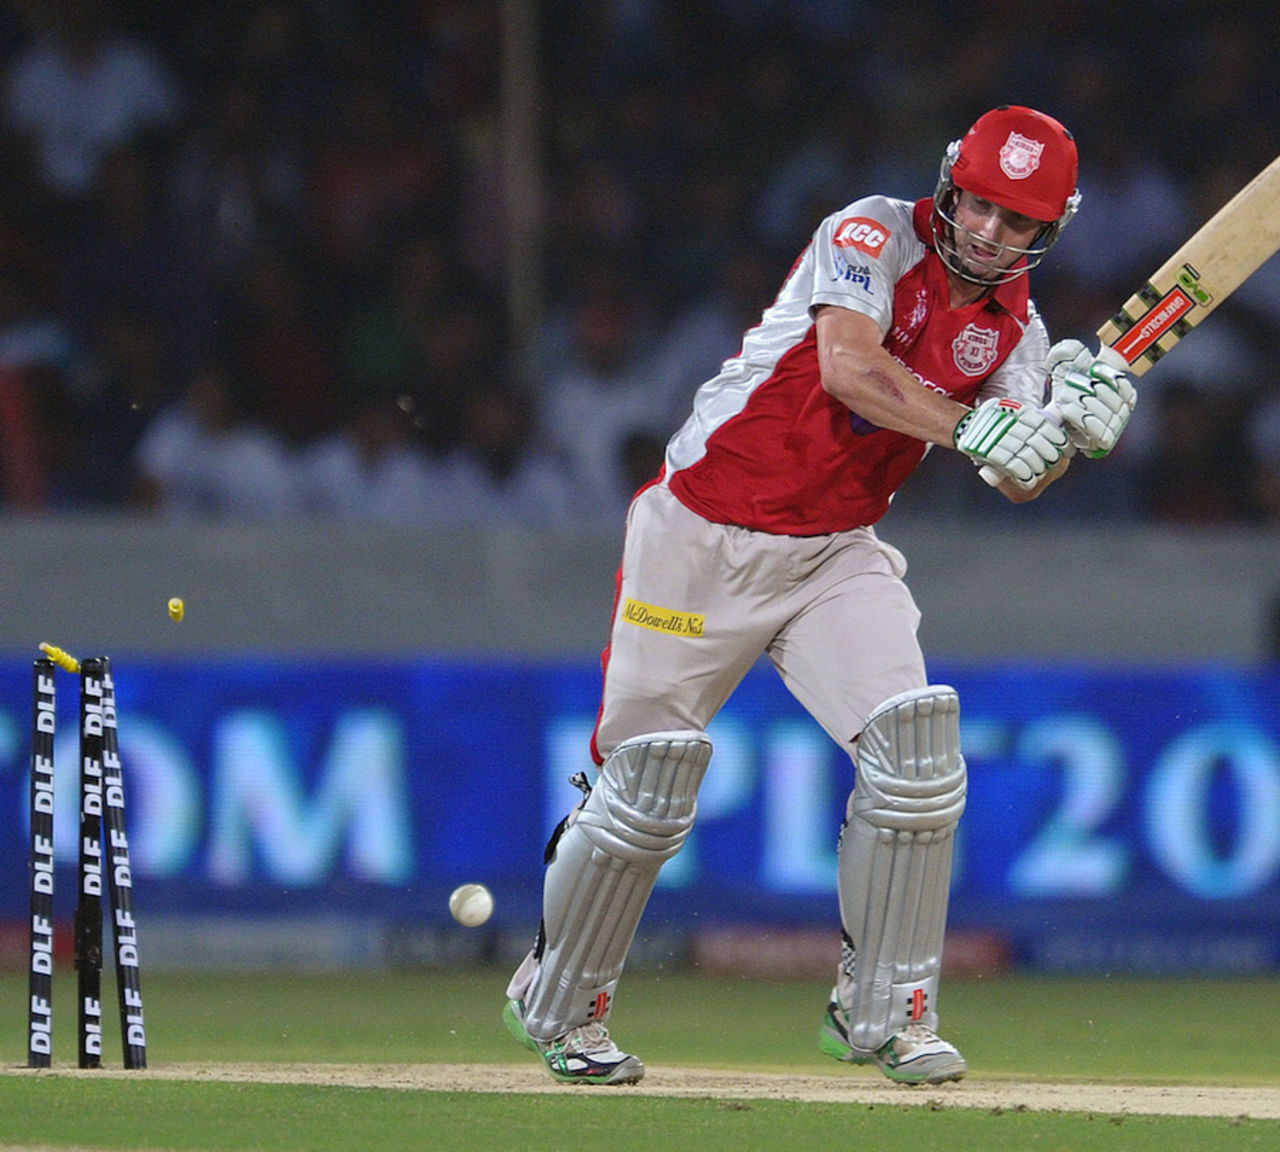 Shaun Marsh was bowled off his pads, Deccan Chargers v Kings XI Punjab, IPL, Hyderabad, May 8, 2012